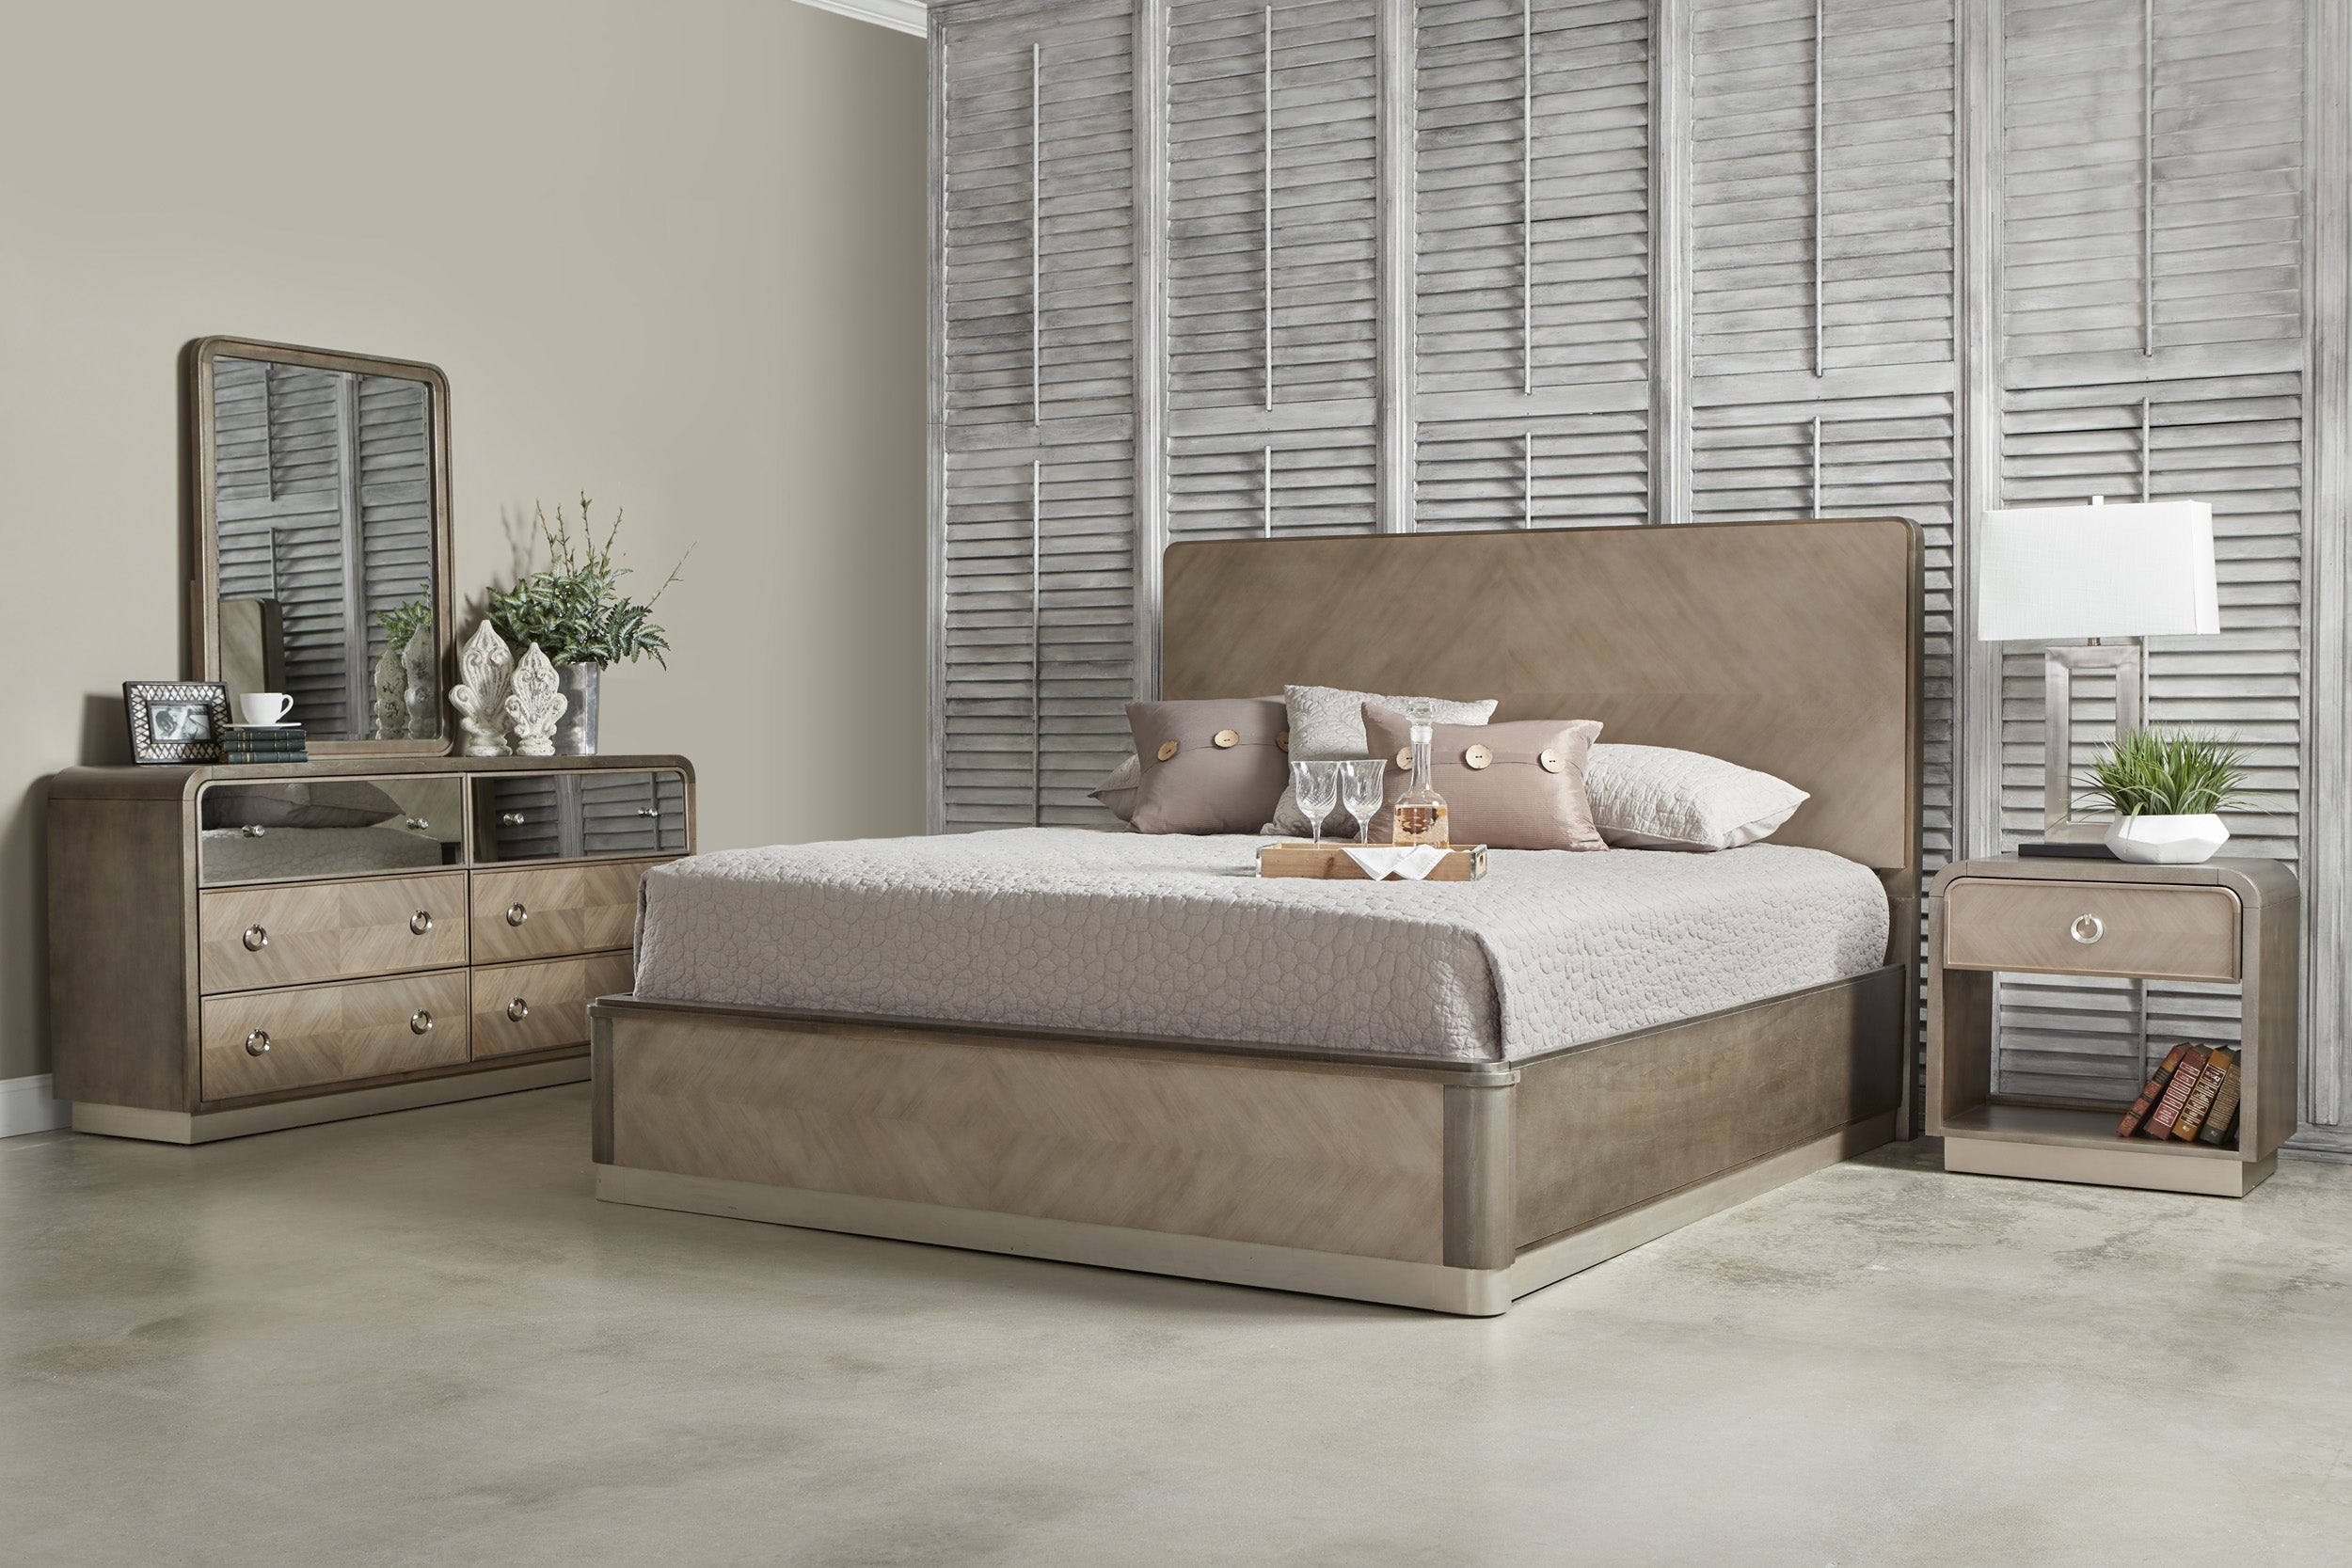 Oasis Home Cascade Upholstered Bed 5 Piece Queen SIze  Bedroom Set